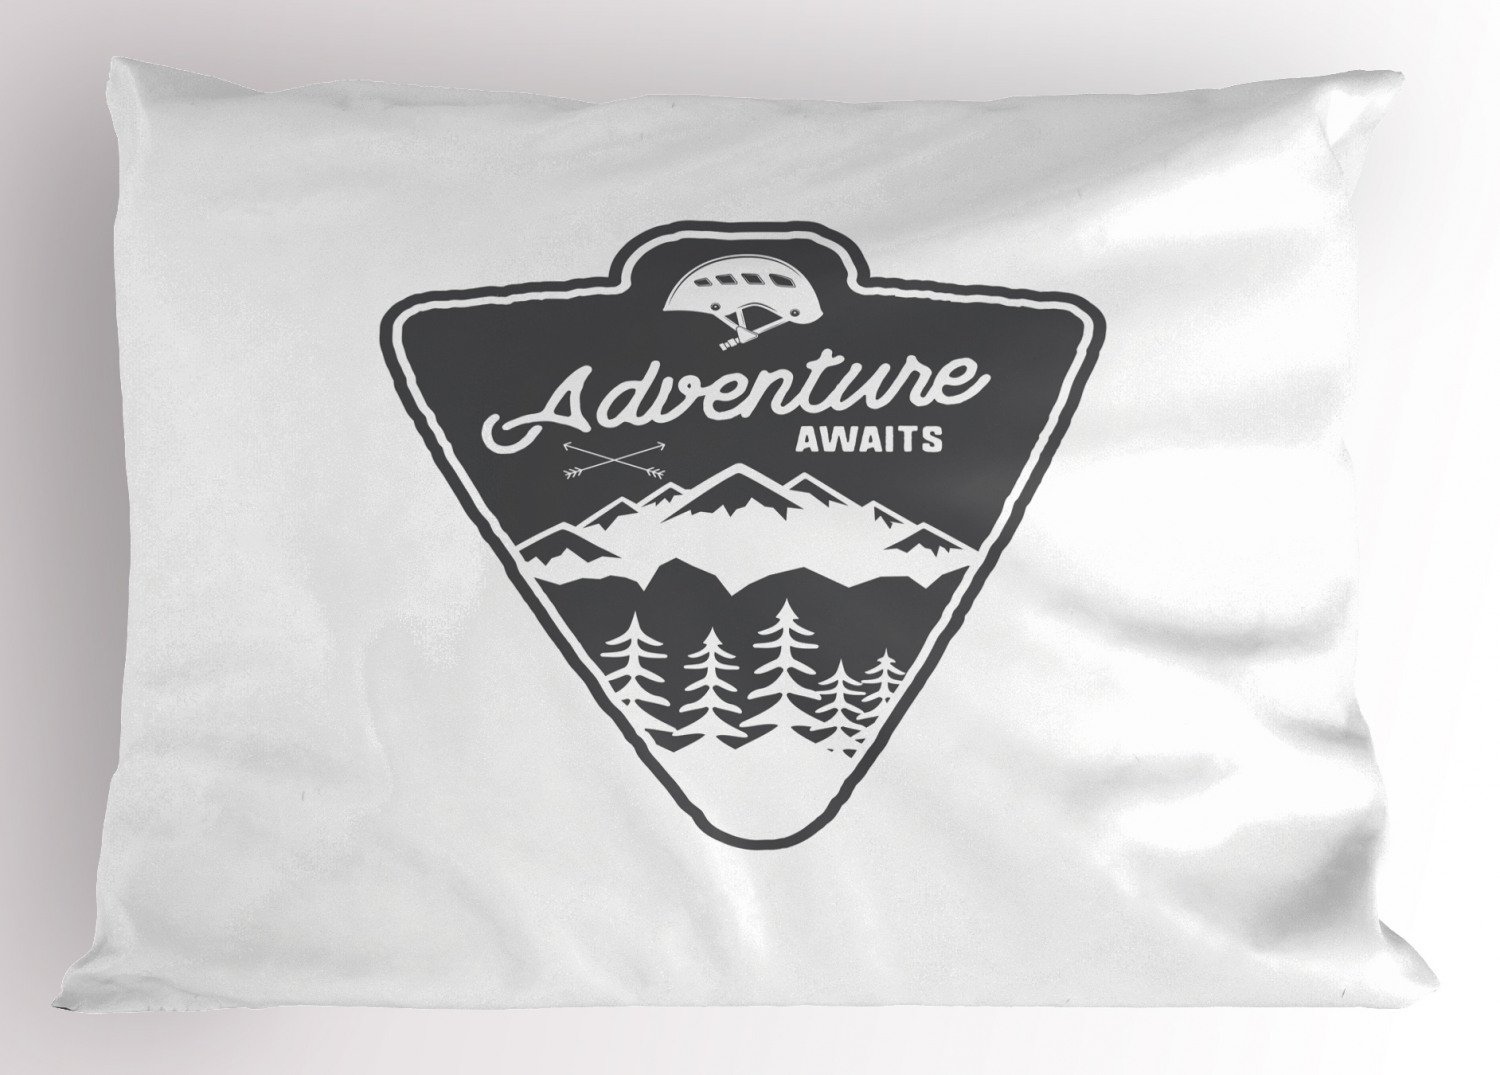 Details about   Adventure Quote Pillow Sham Decorative Pillowcase 3 Sizes for Bedroom Decor 